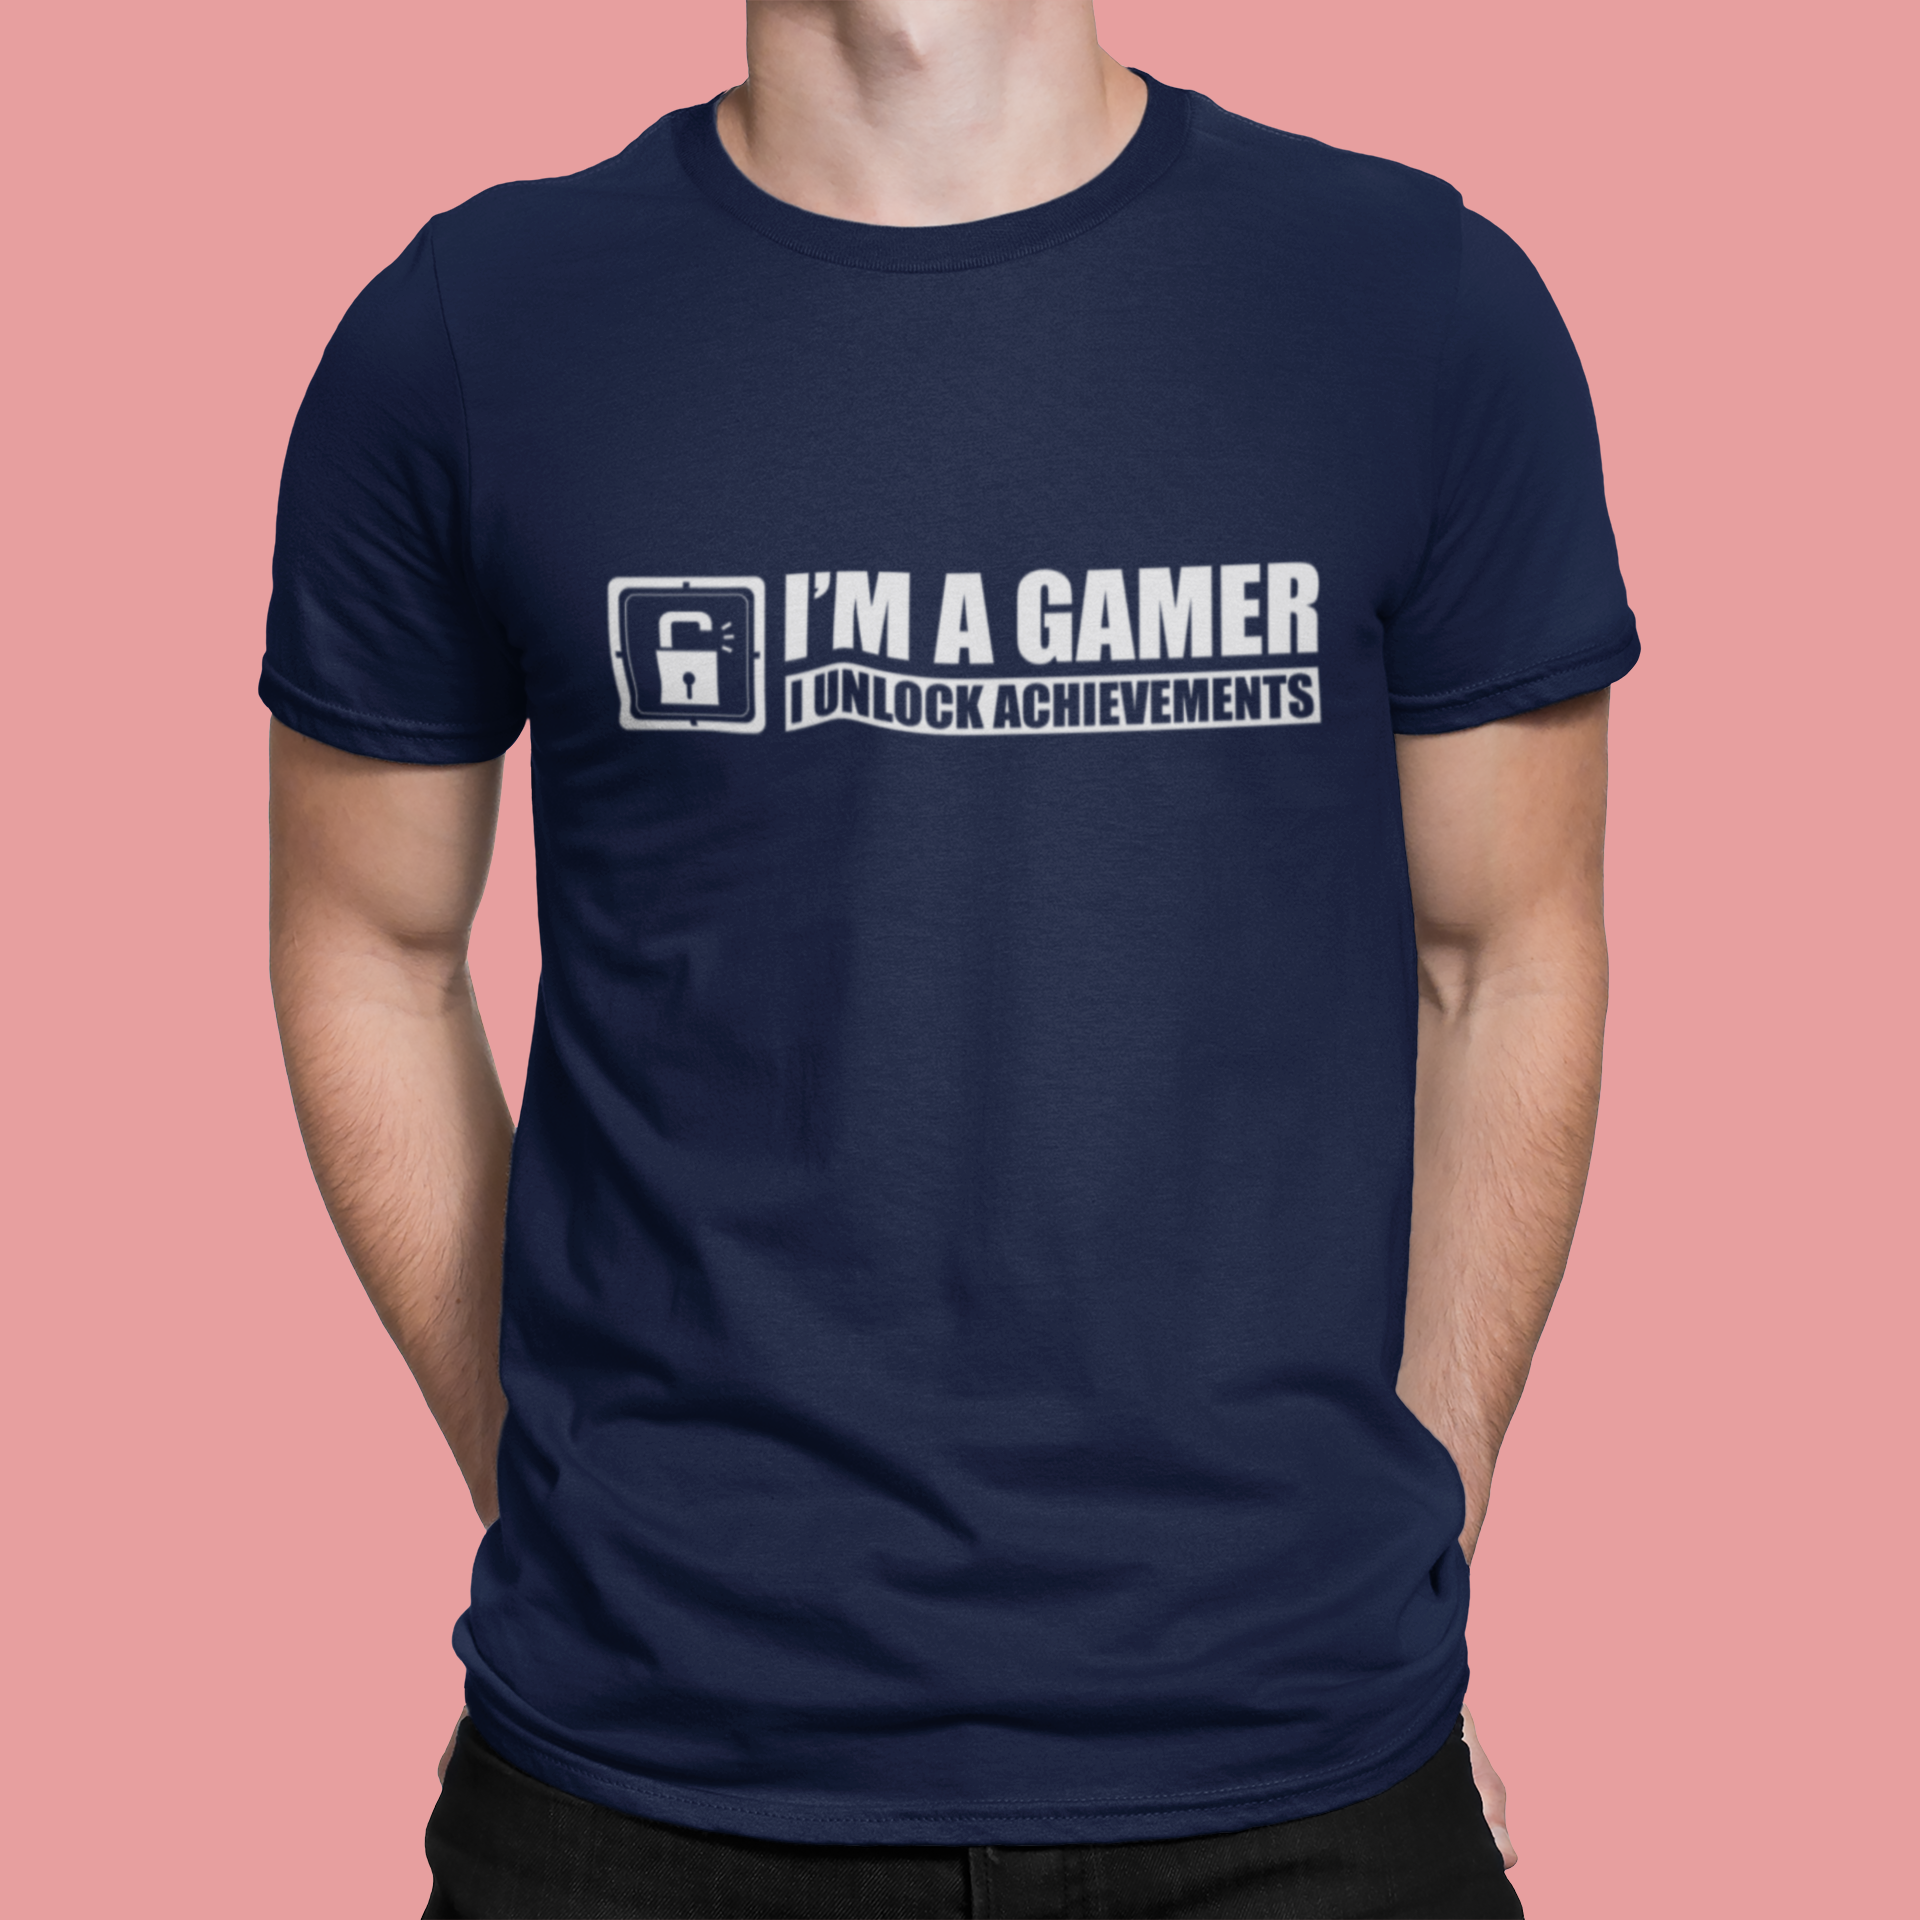 I'm a gamer. I unlock achievements